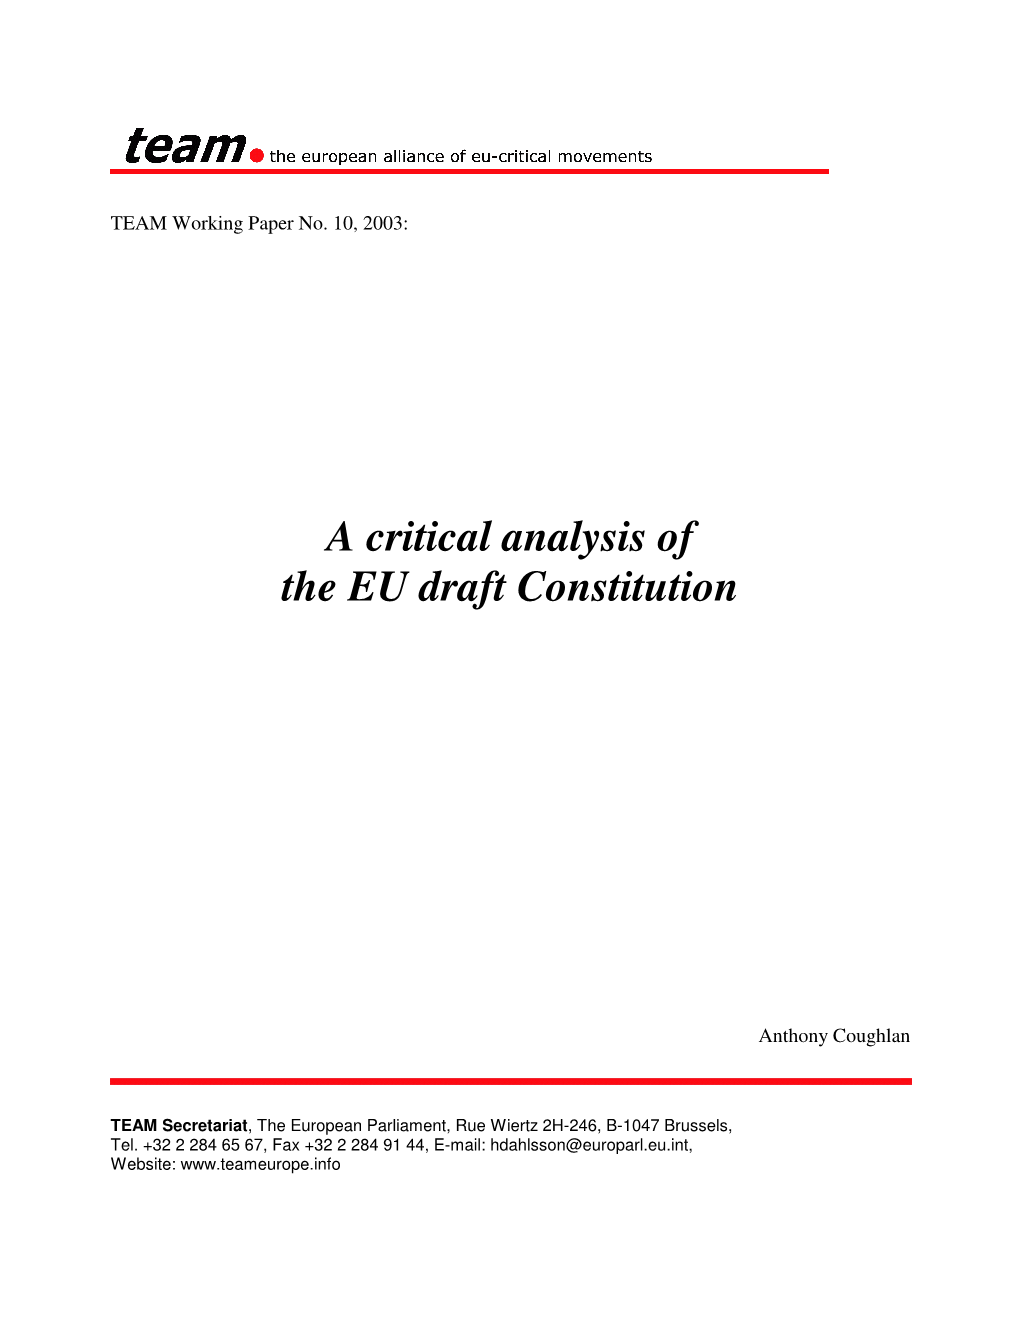 A Critical Analysis of the EU Draft Constitution -PDF